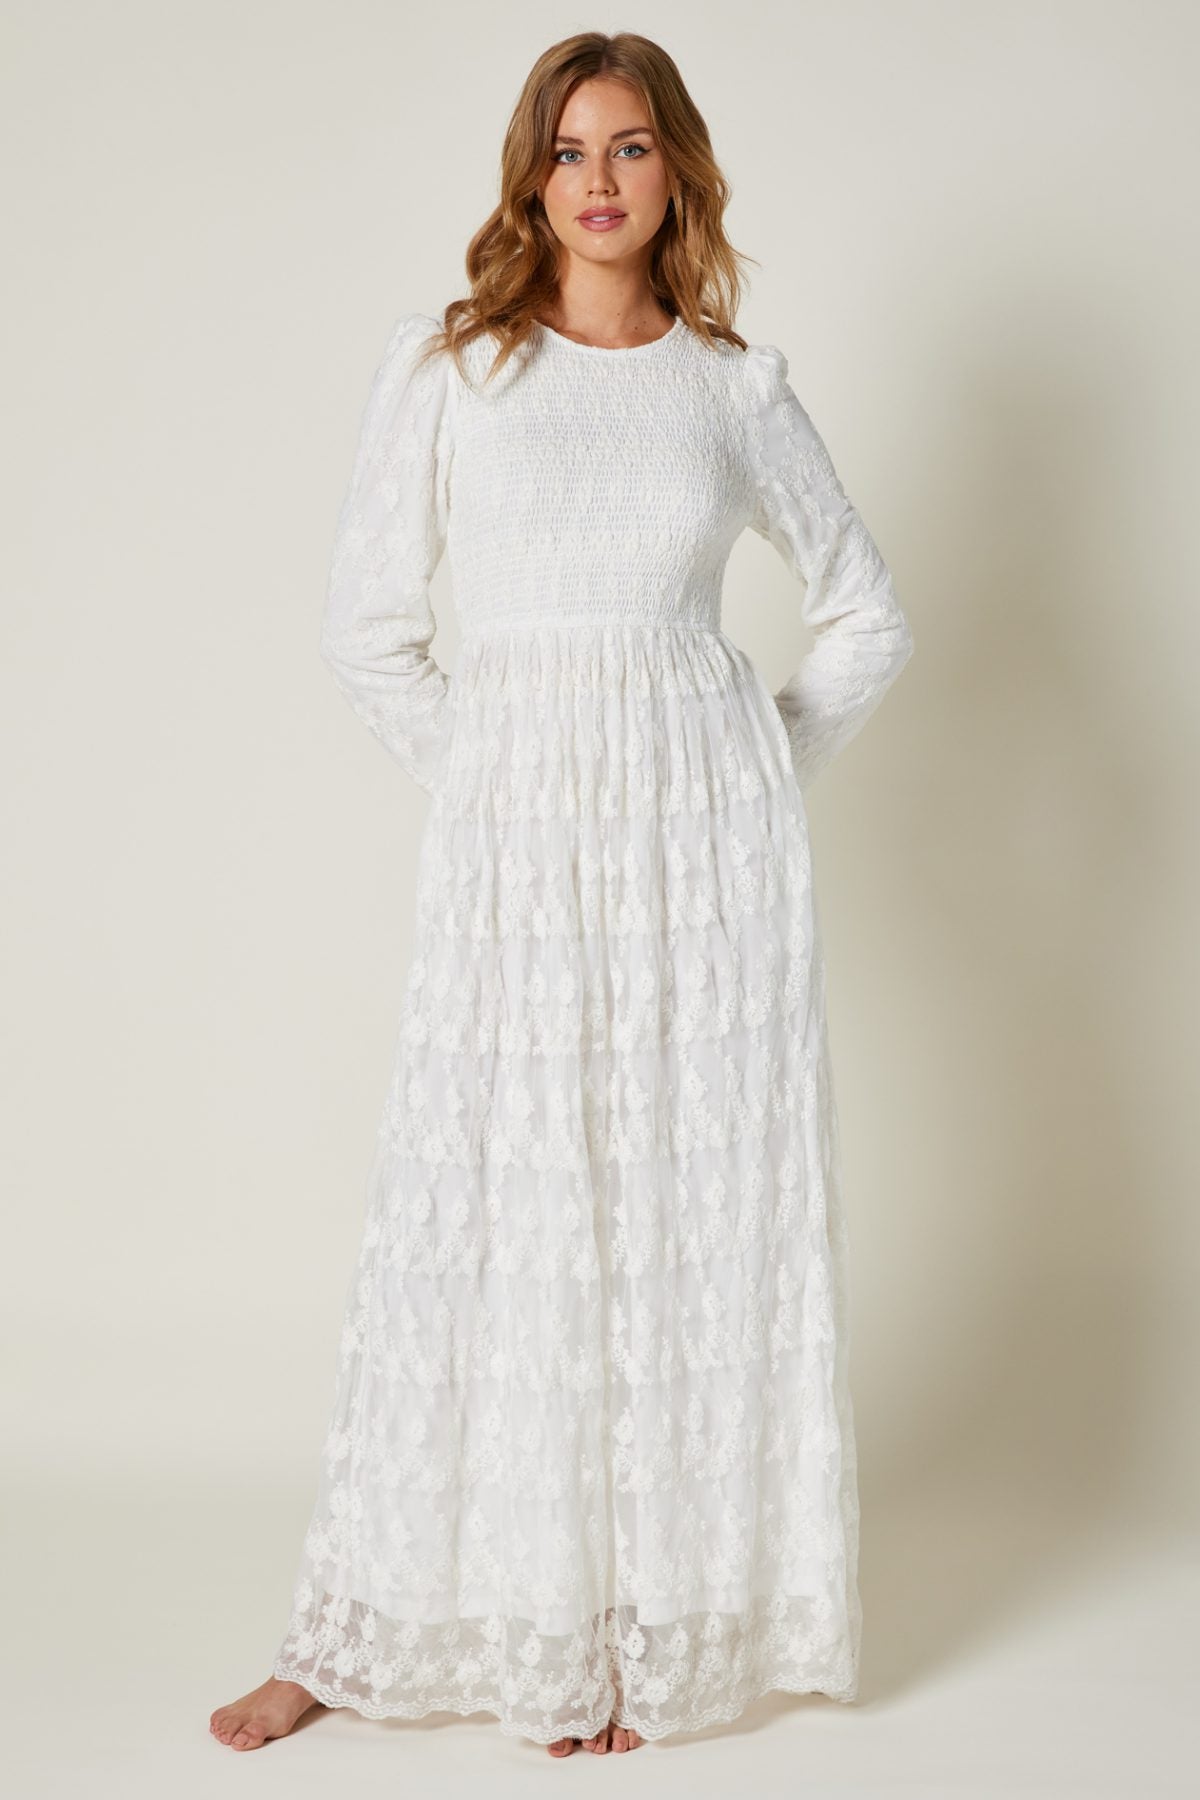 white temple dress